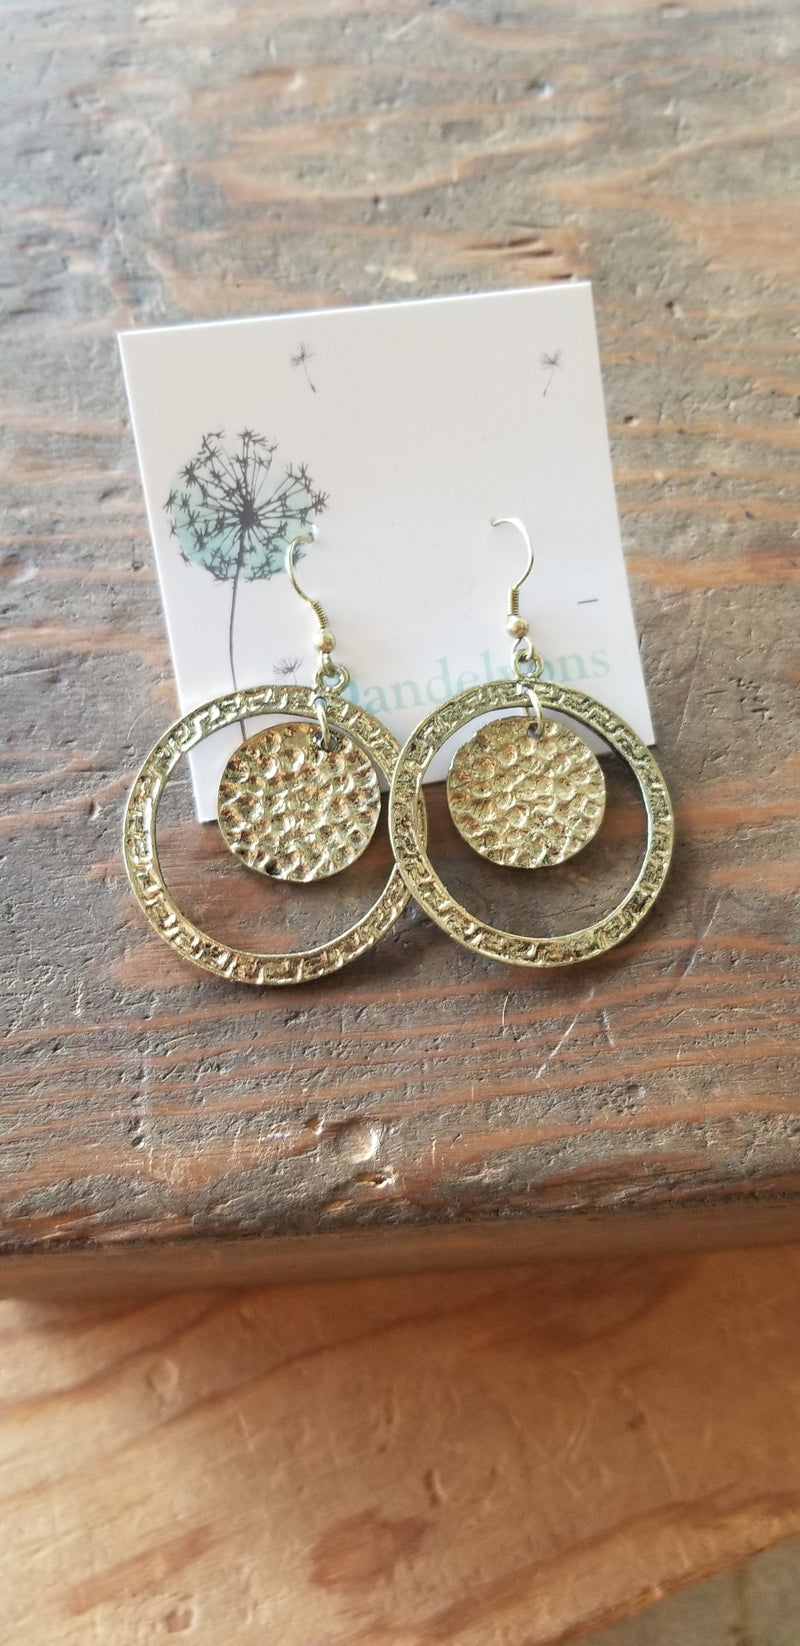 Intricate patterned earrings